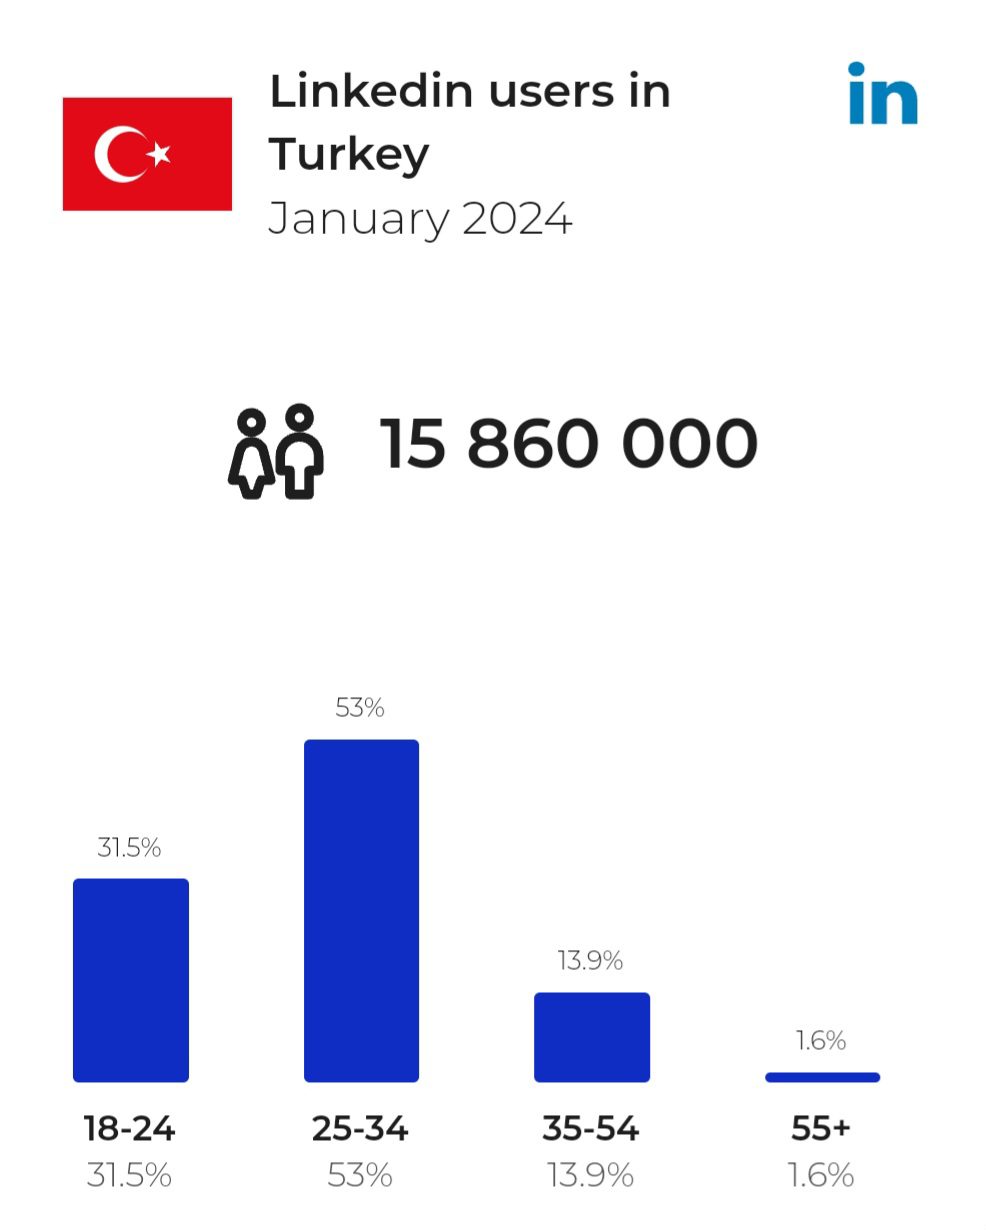 Linkedin users in Turkey in 2024